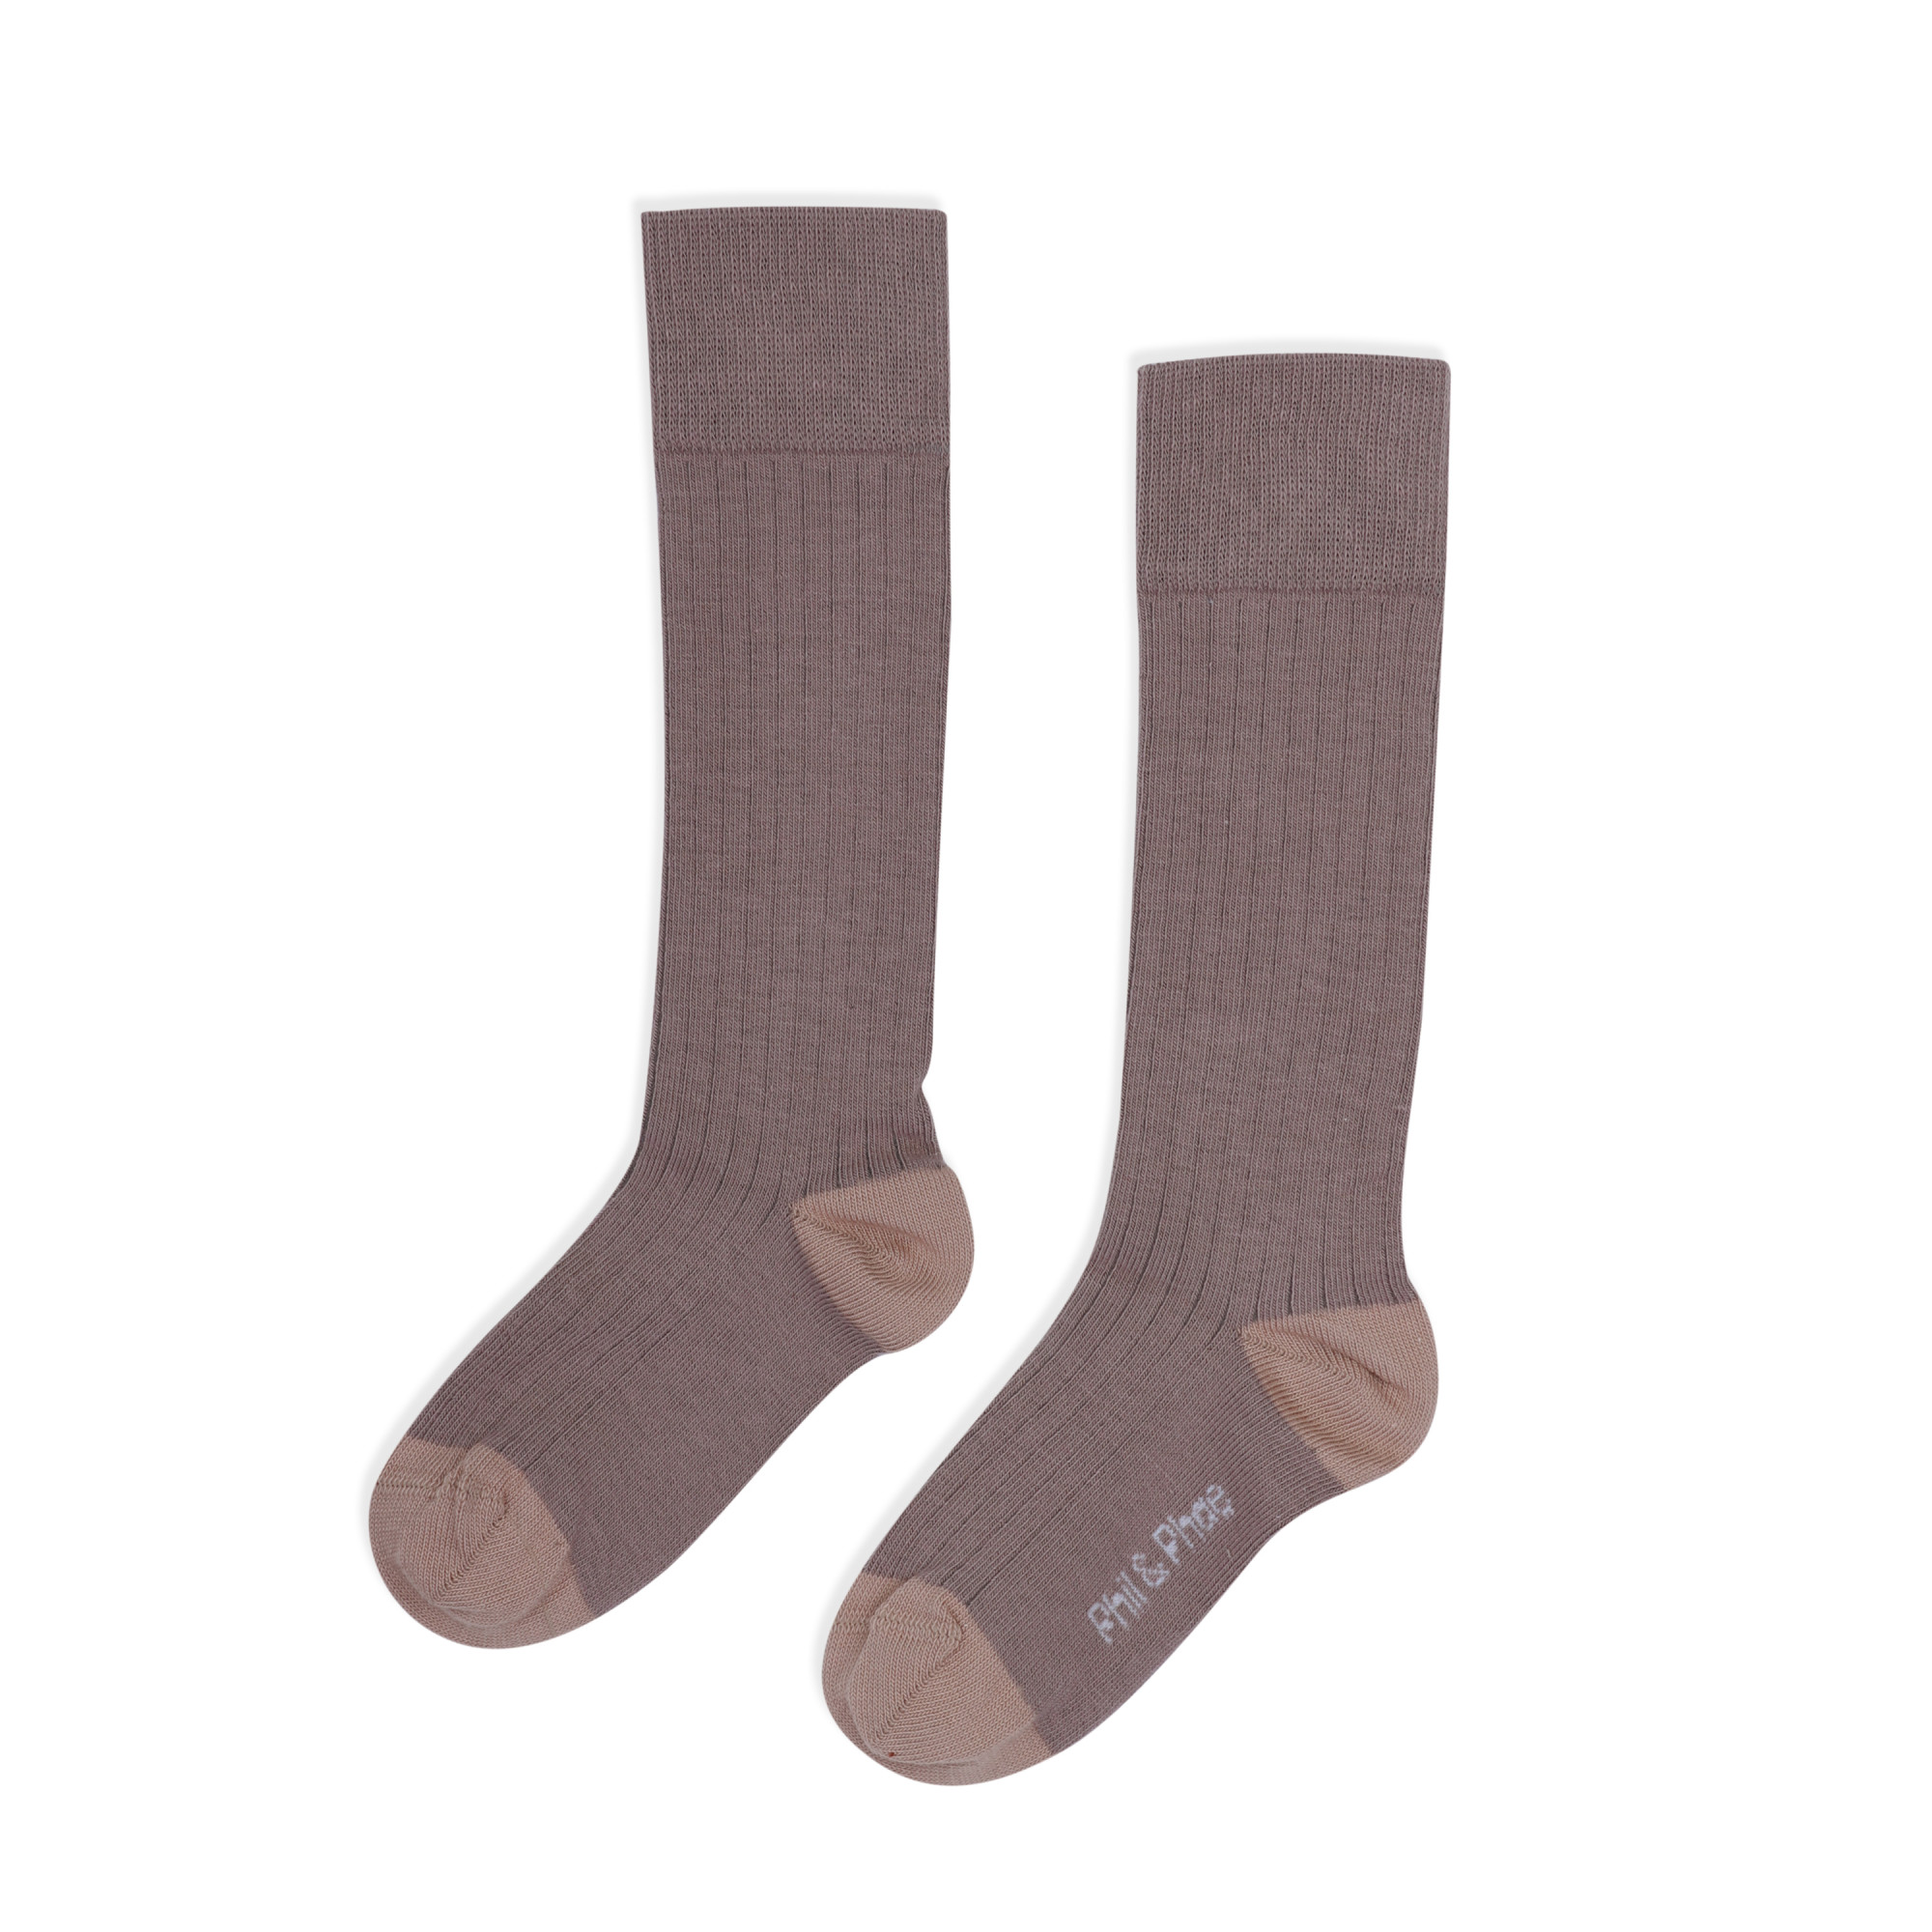 Ribbed knee socks - Socks & accessories - Sustainable kids clothing